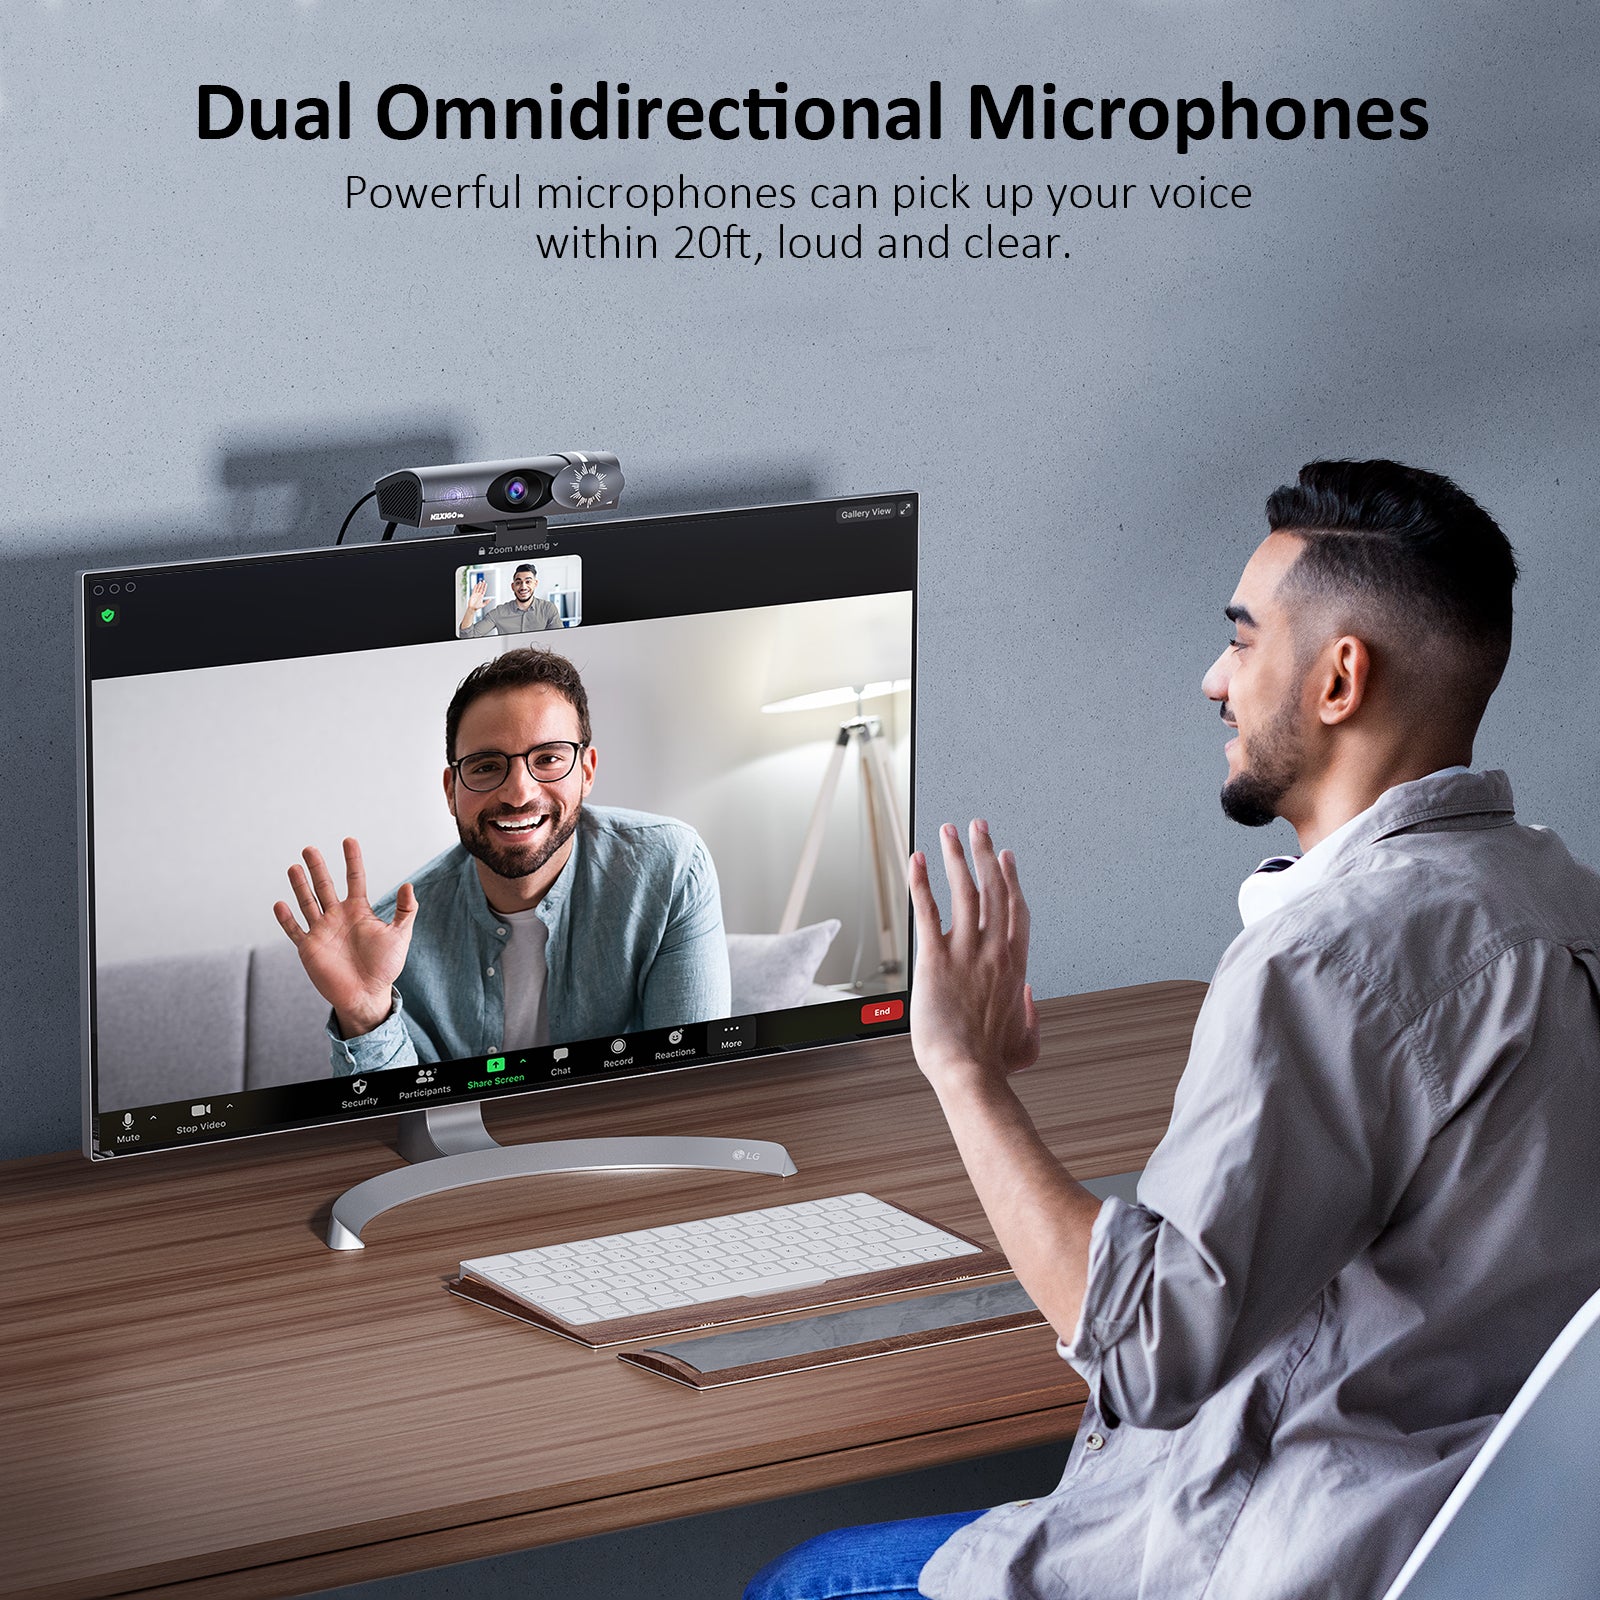 Webcam with Dual Omnidirectional Microphones, captures audio up to 20ft away.